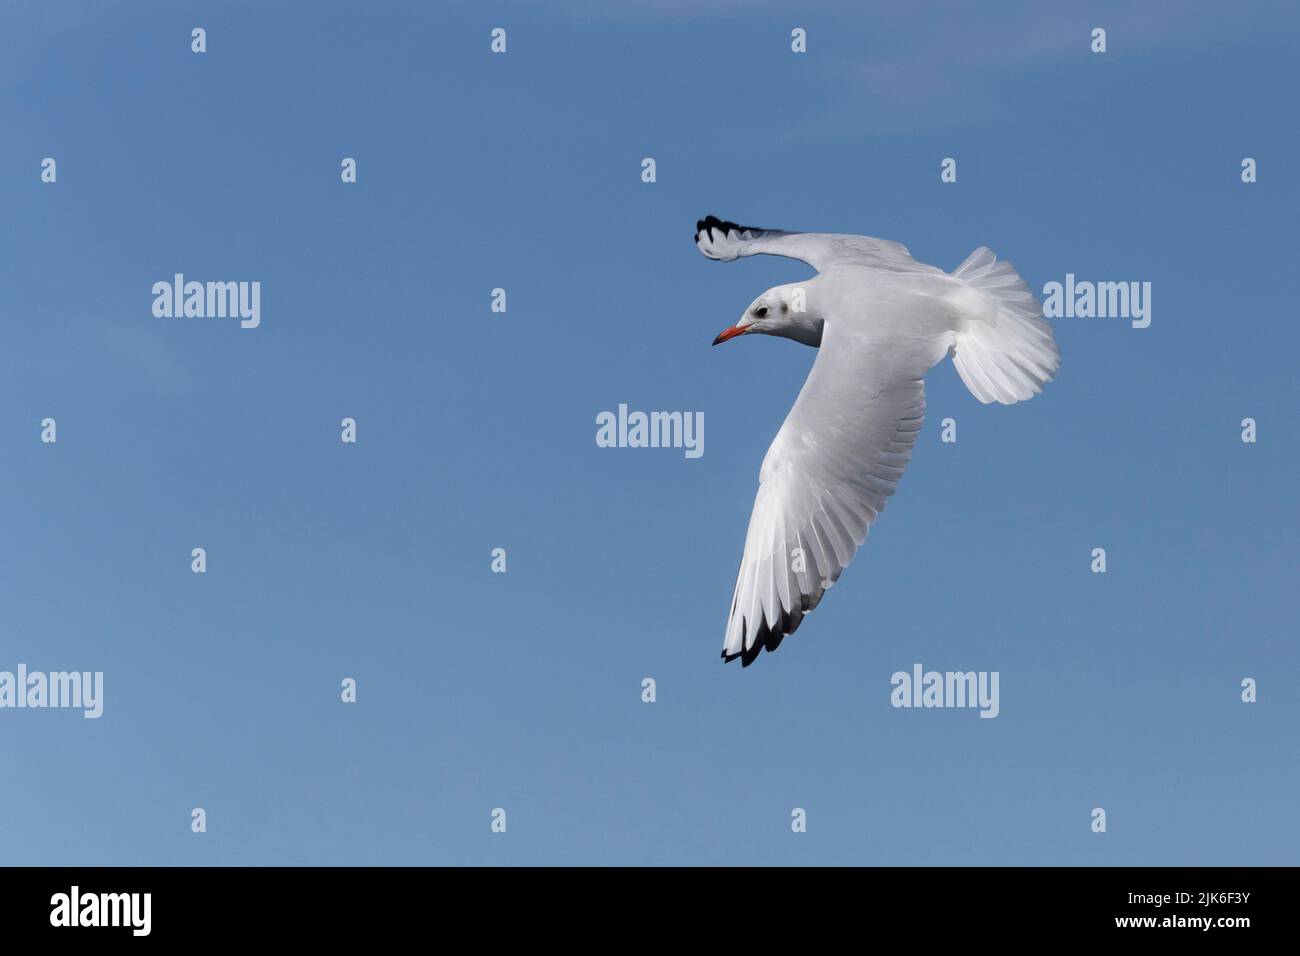 cerca de la gaviota común volando en un cielo azul Foto de stock